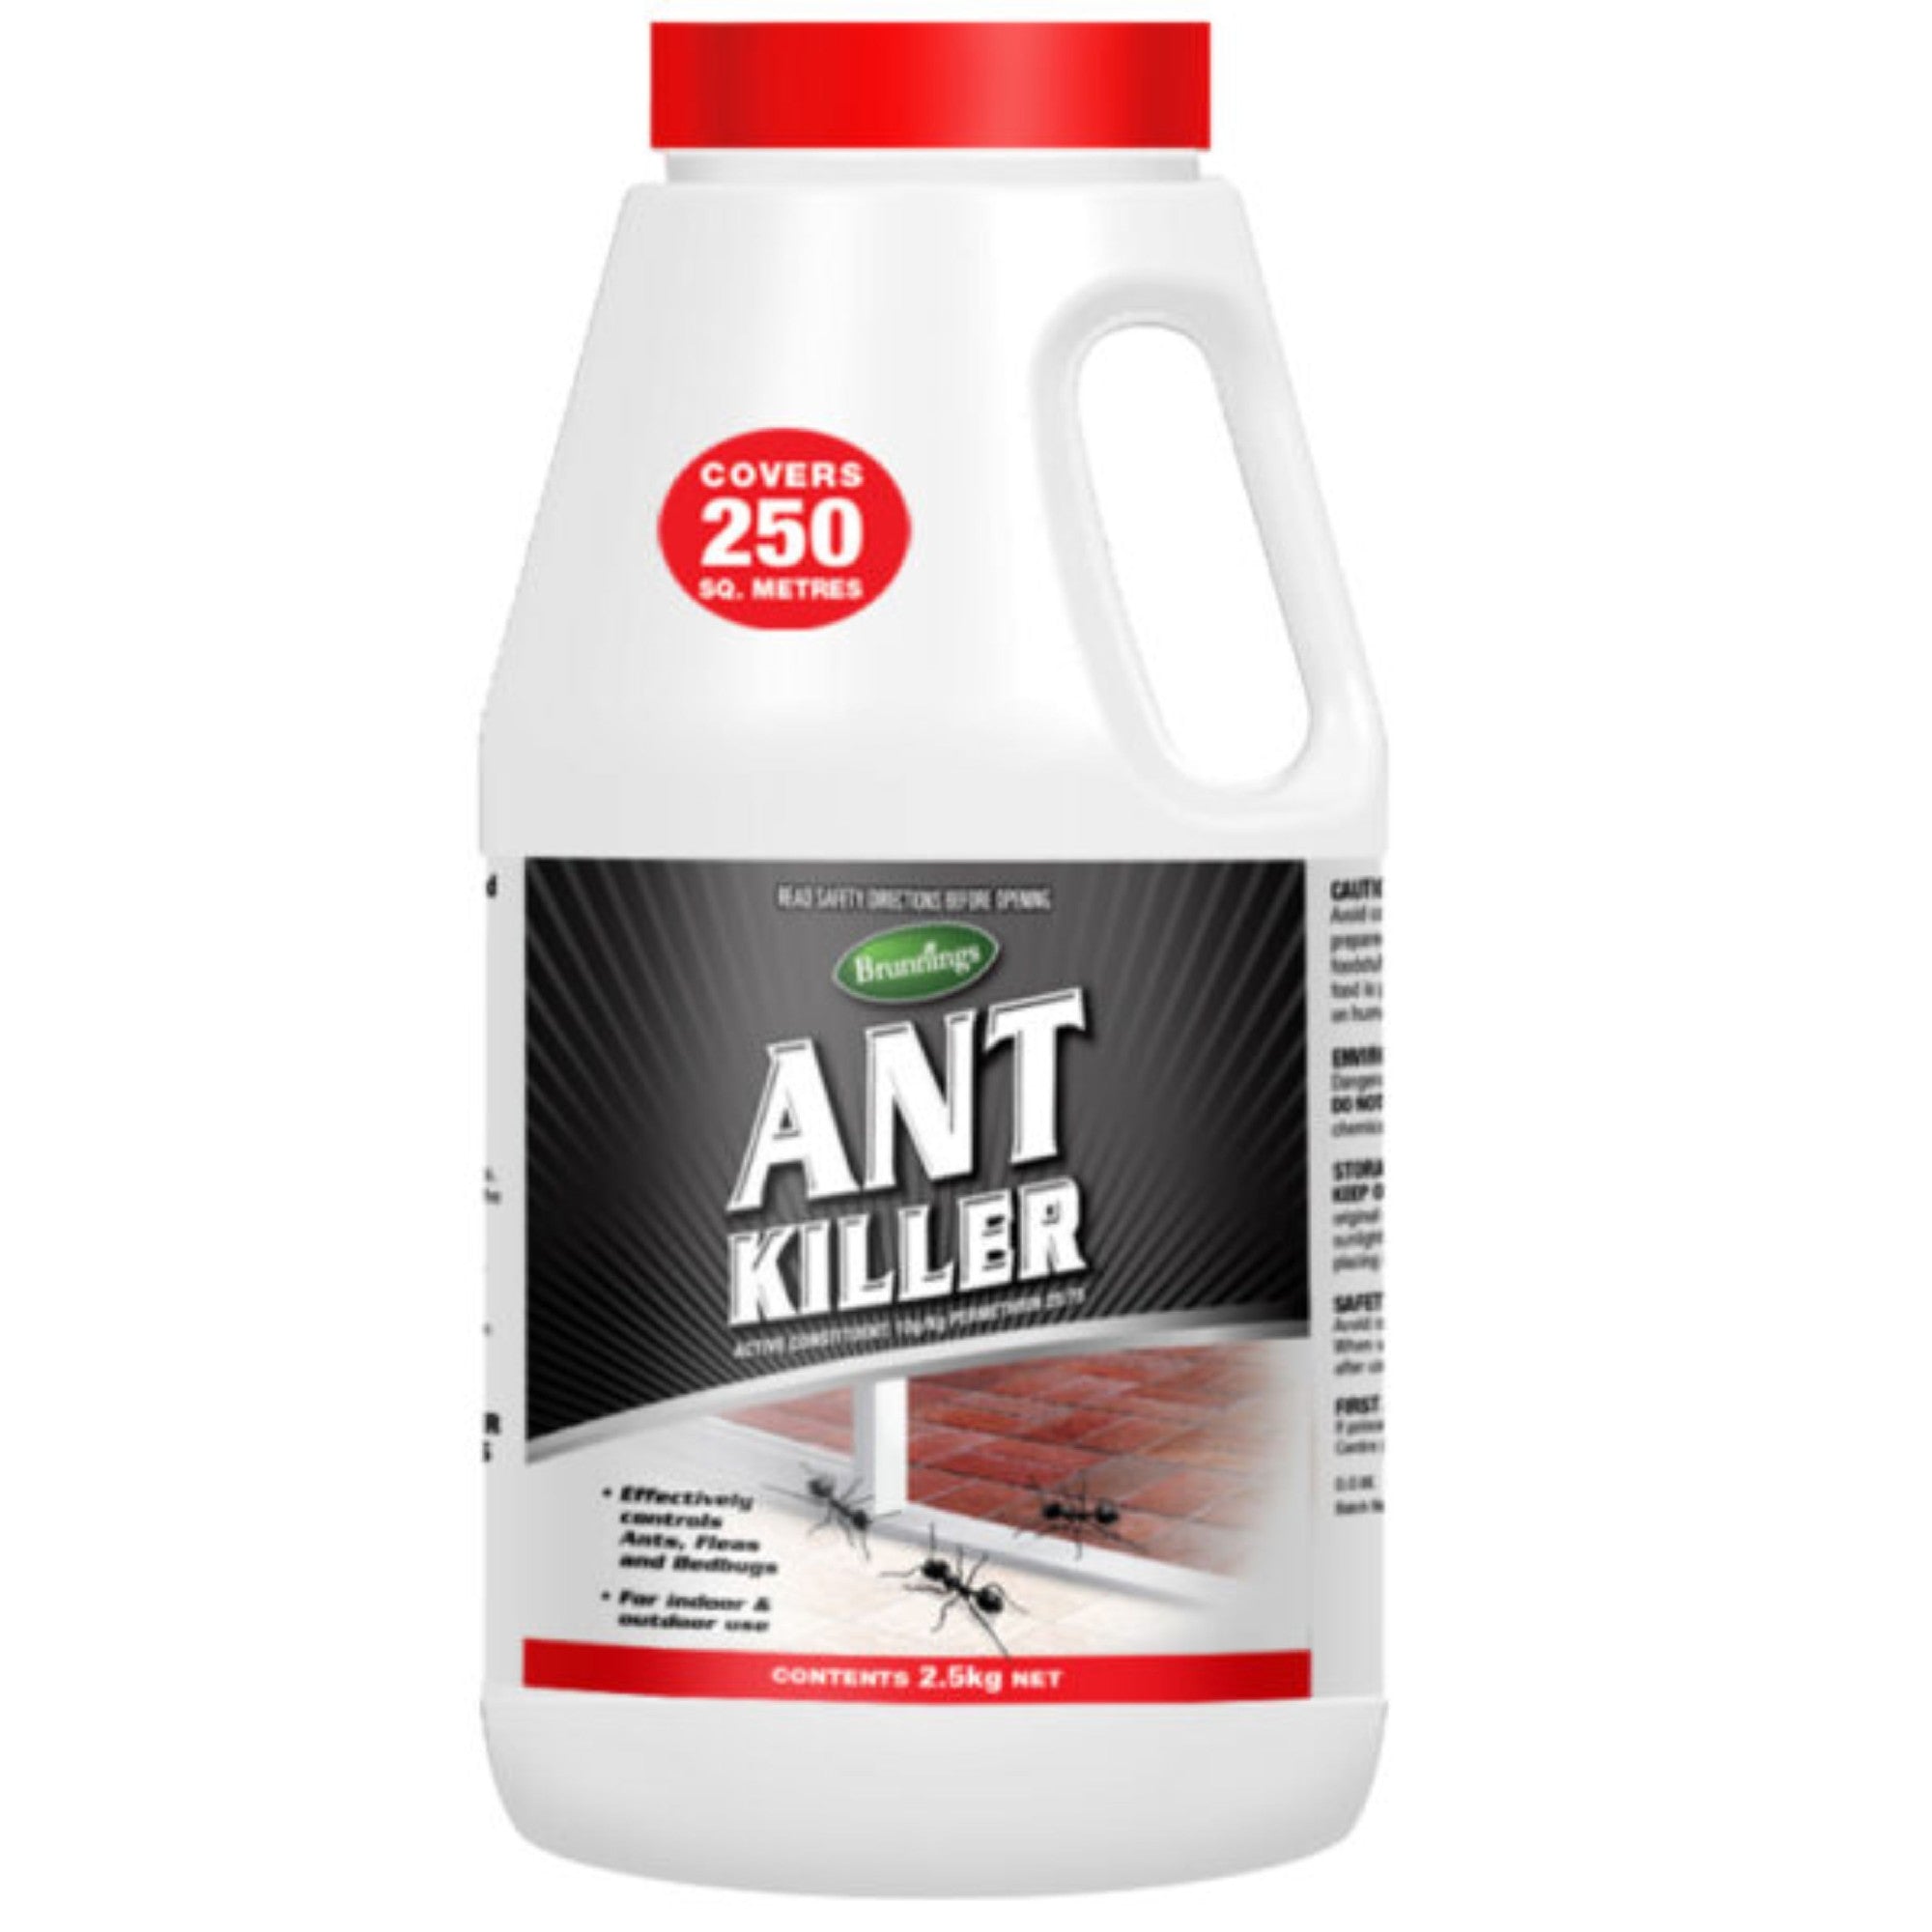 Ant Kill Powder 2.5kg